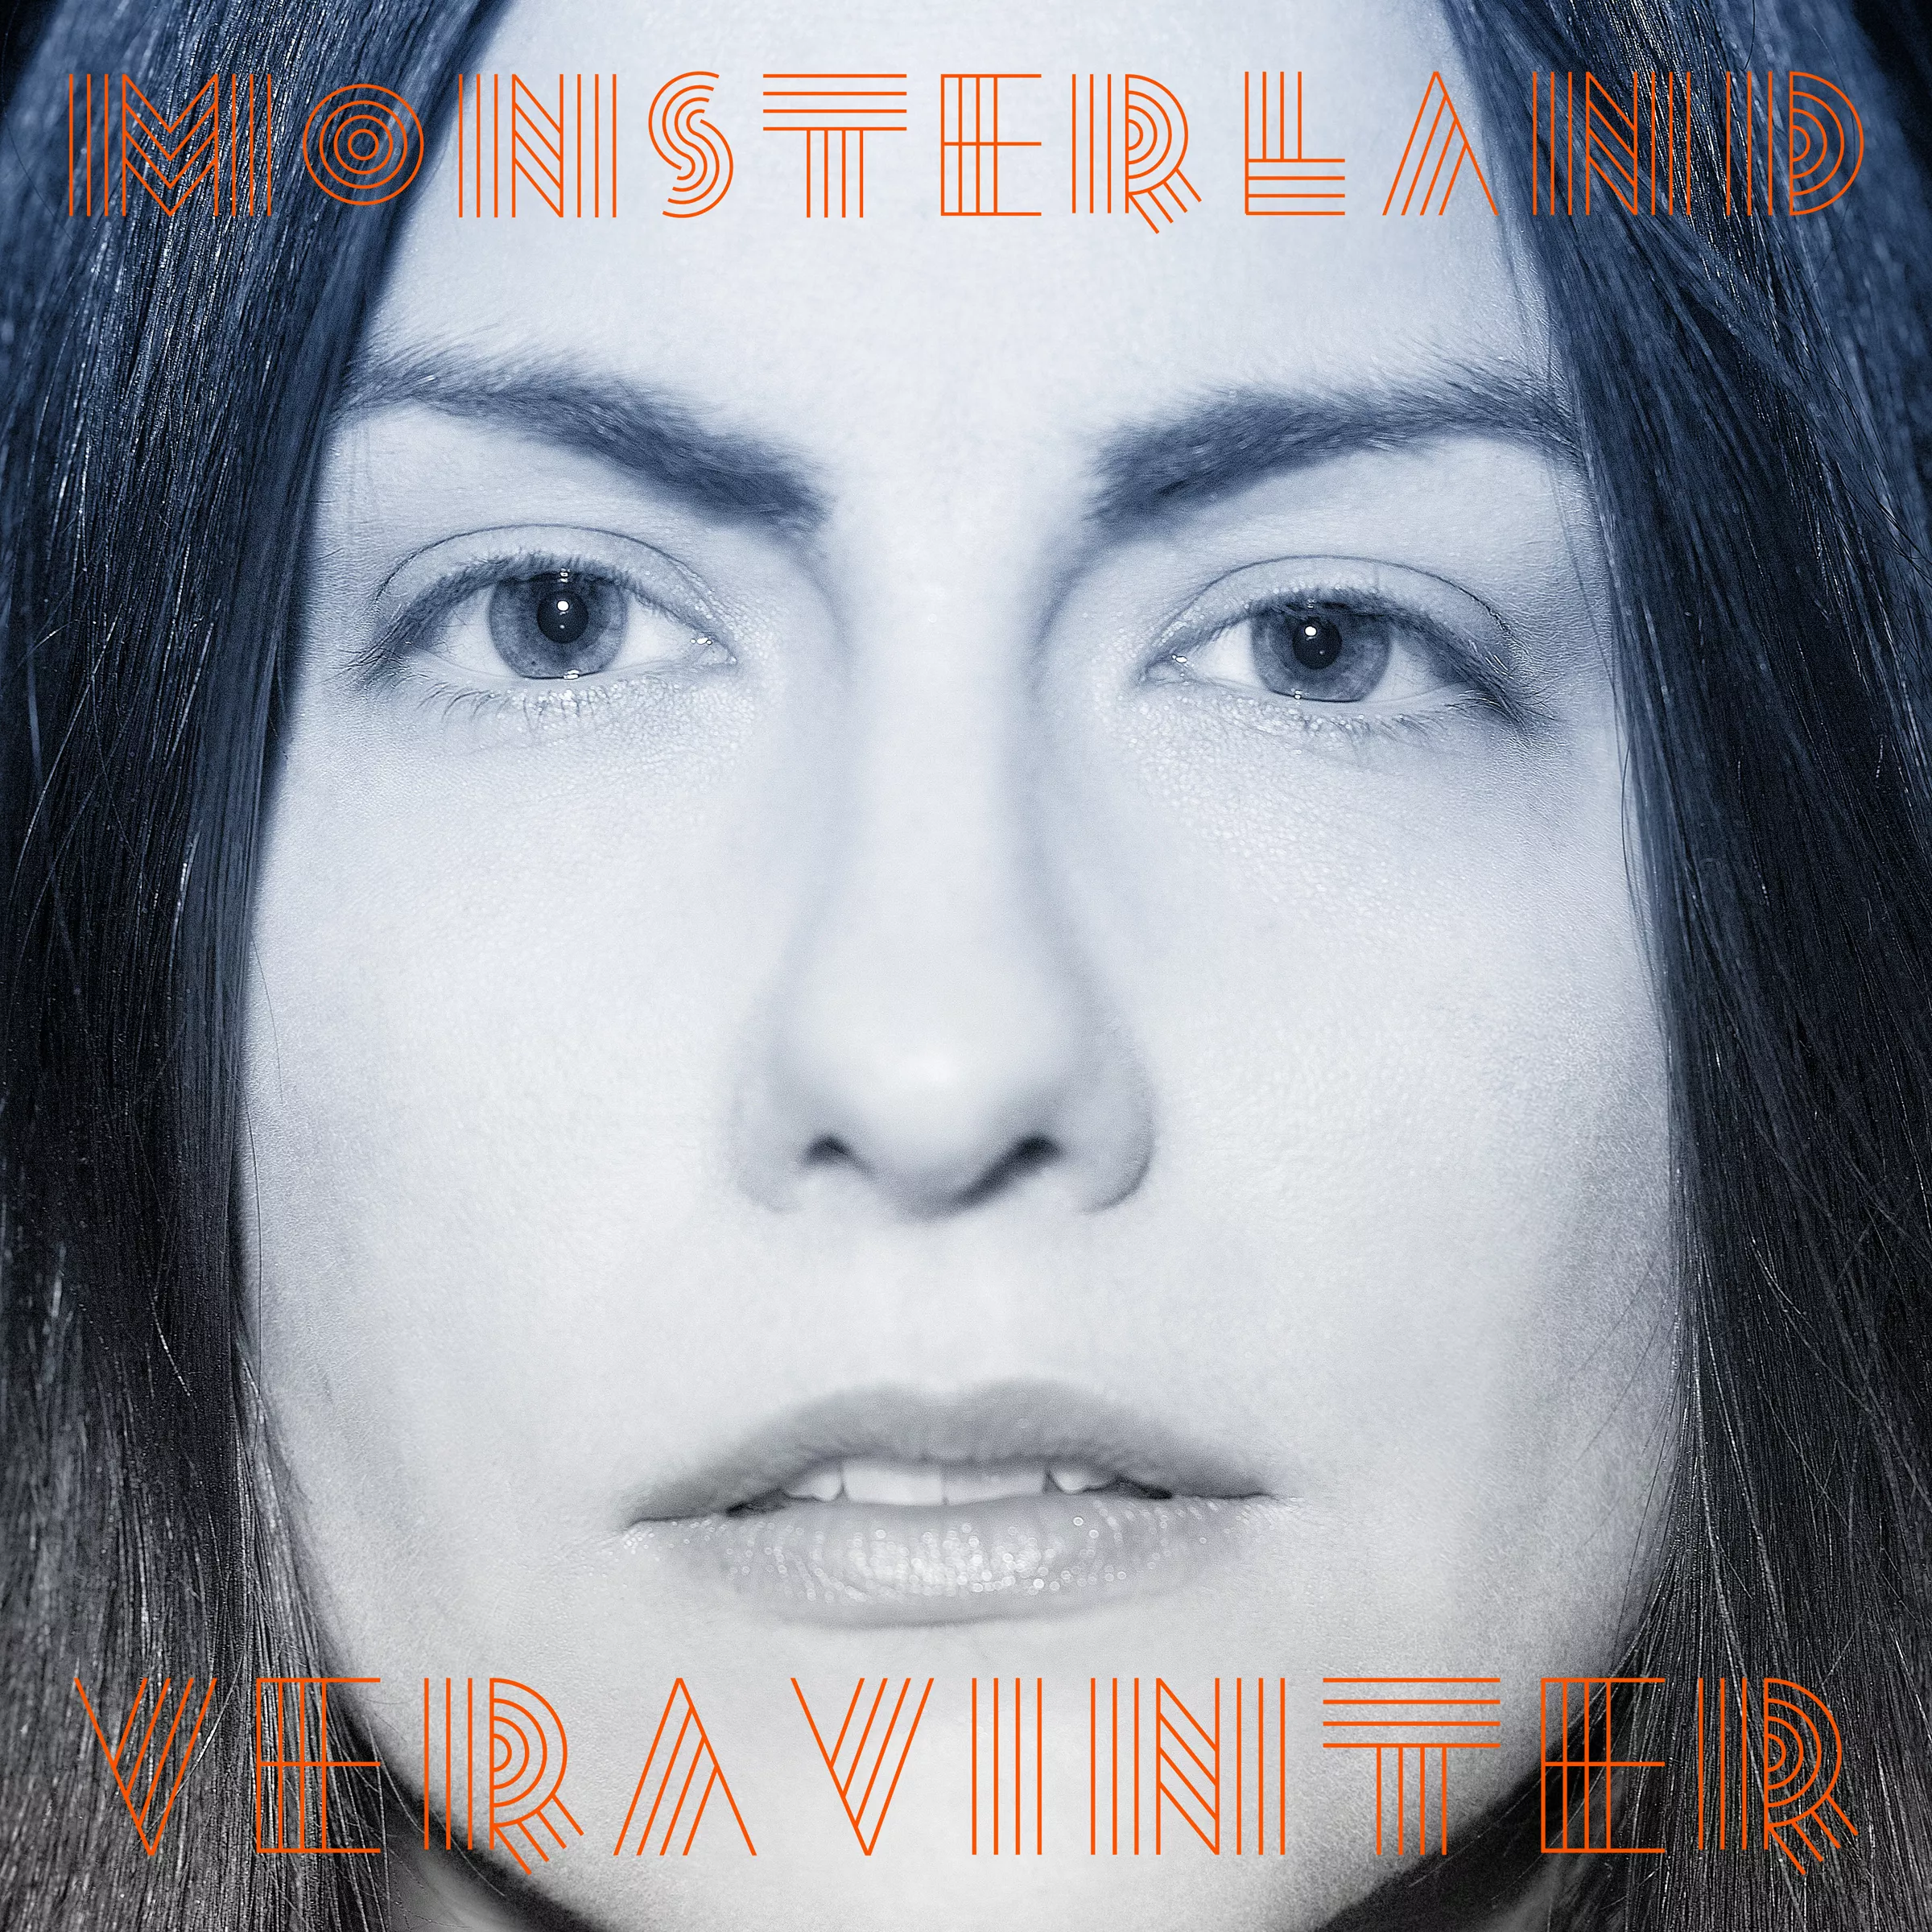 Monsterland - Vera Vinter